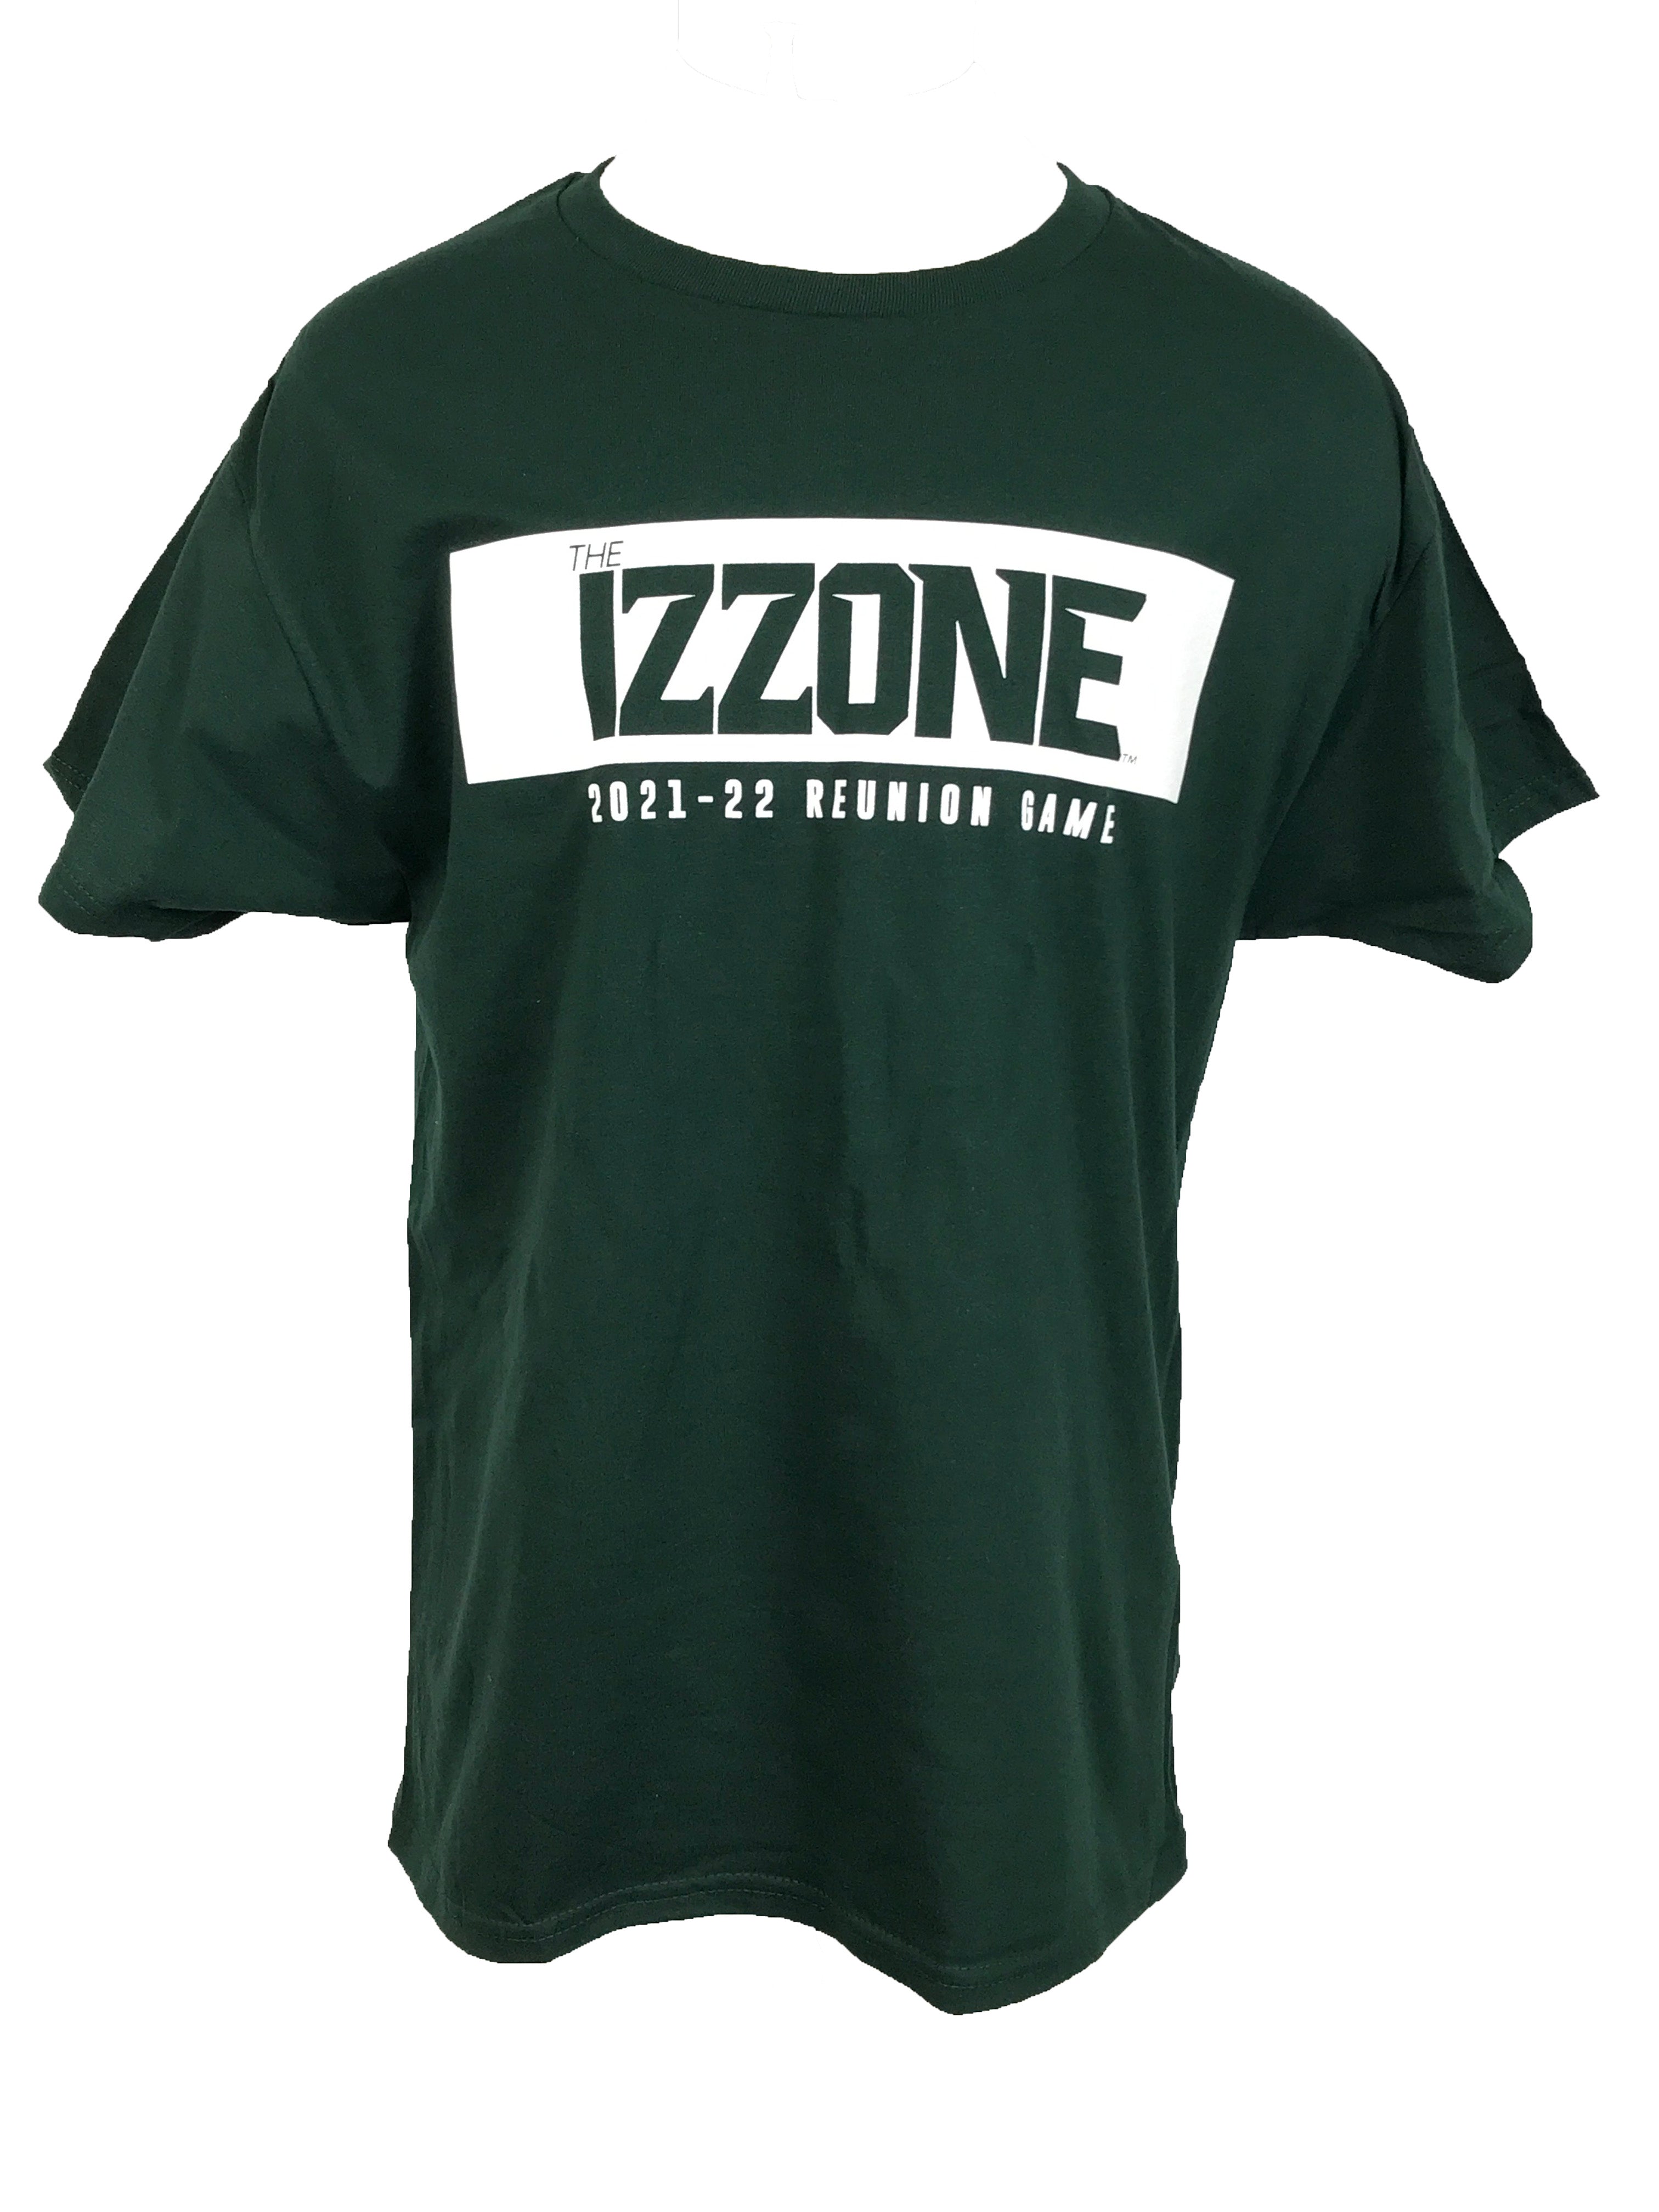 Hanes Green The Izzone 2021-2022 Reunion MSU Basketball T-Shirt Men's Size M